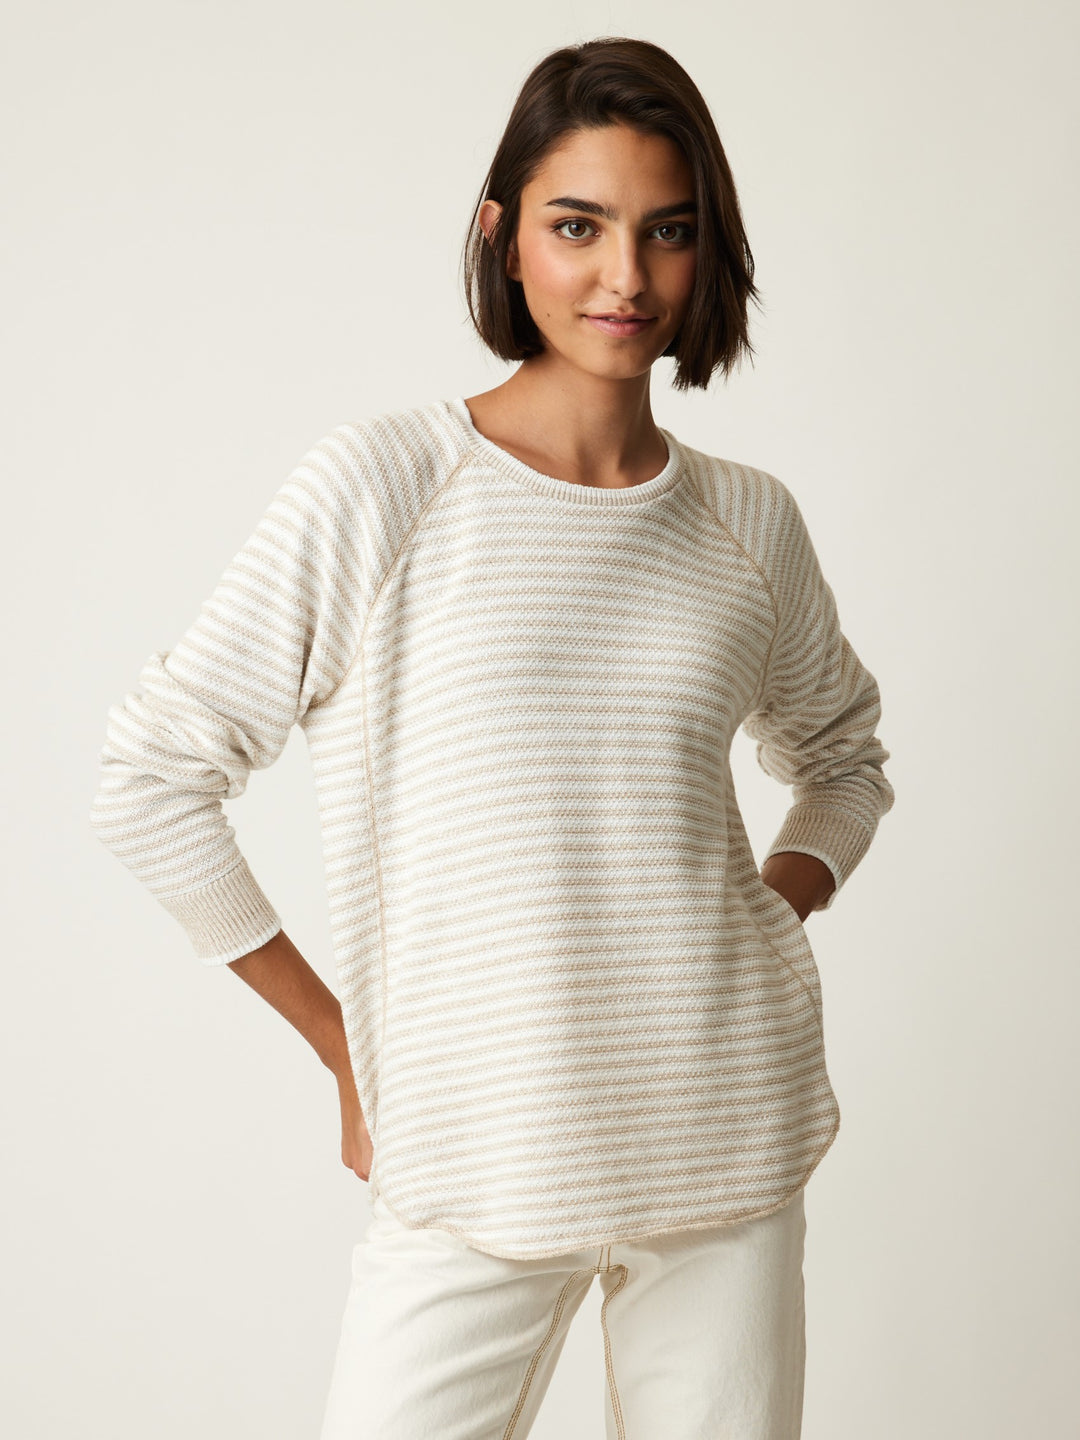 White and Sandstone Stratus Sweater